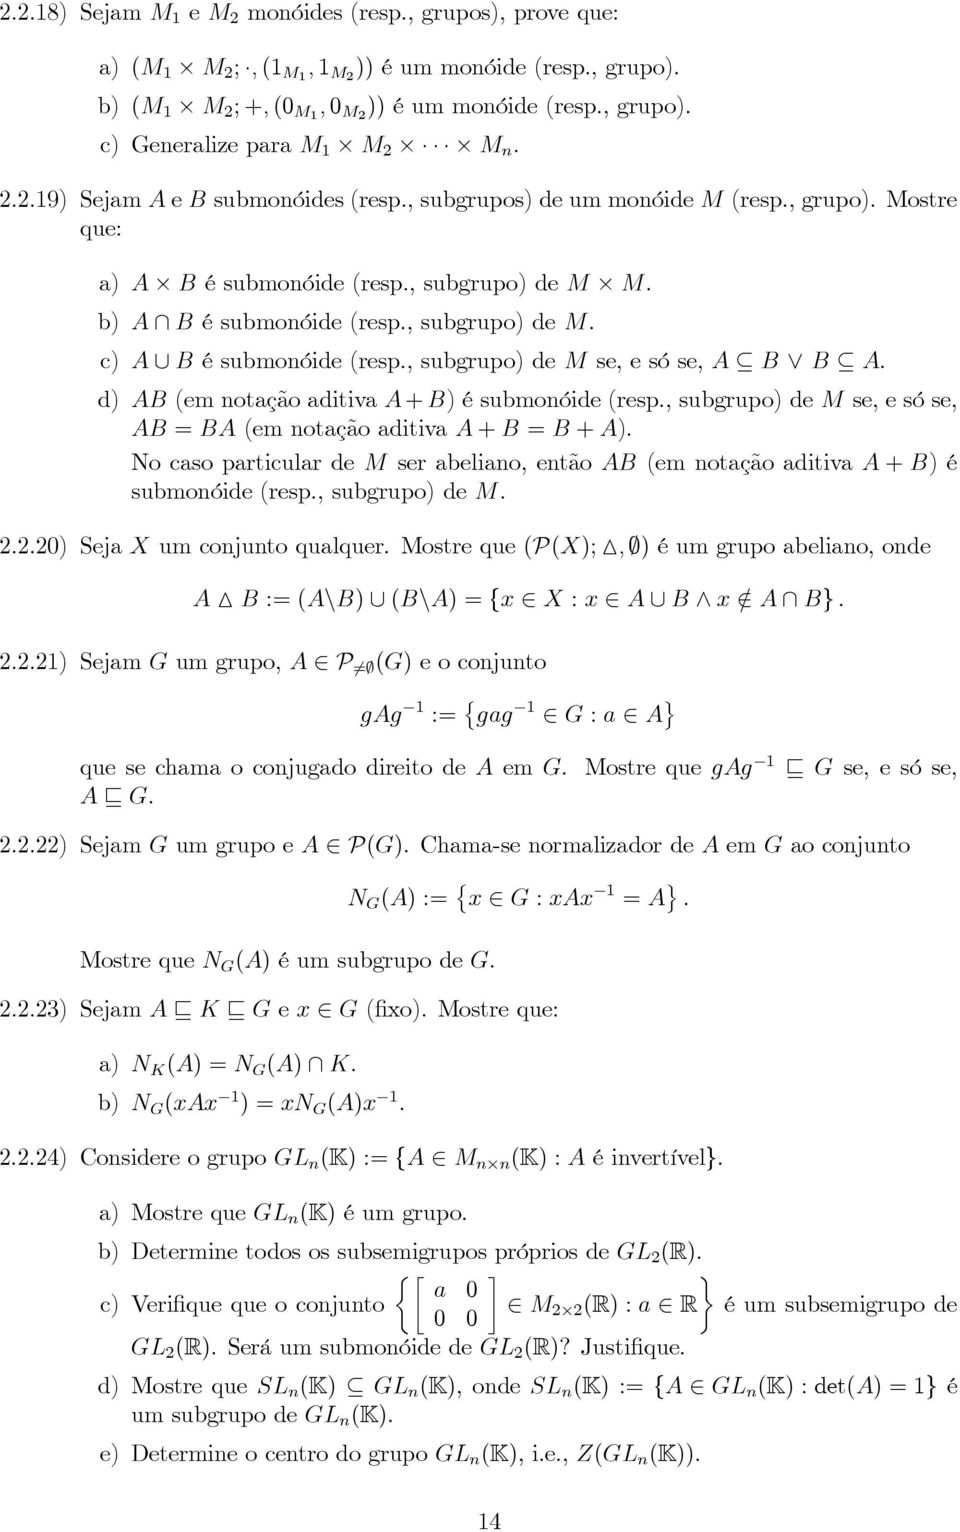 Sebenta De Exercicios De Algebra I Curso Matematica Pdf Free Download